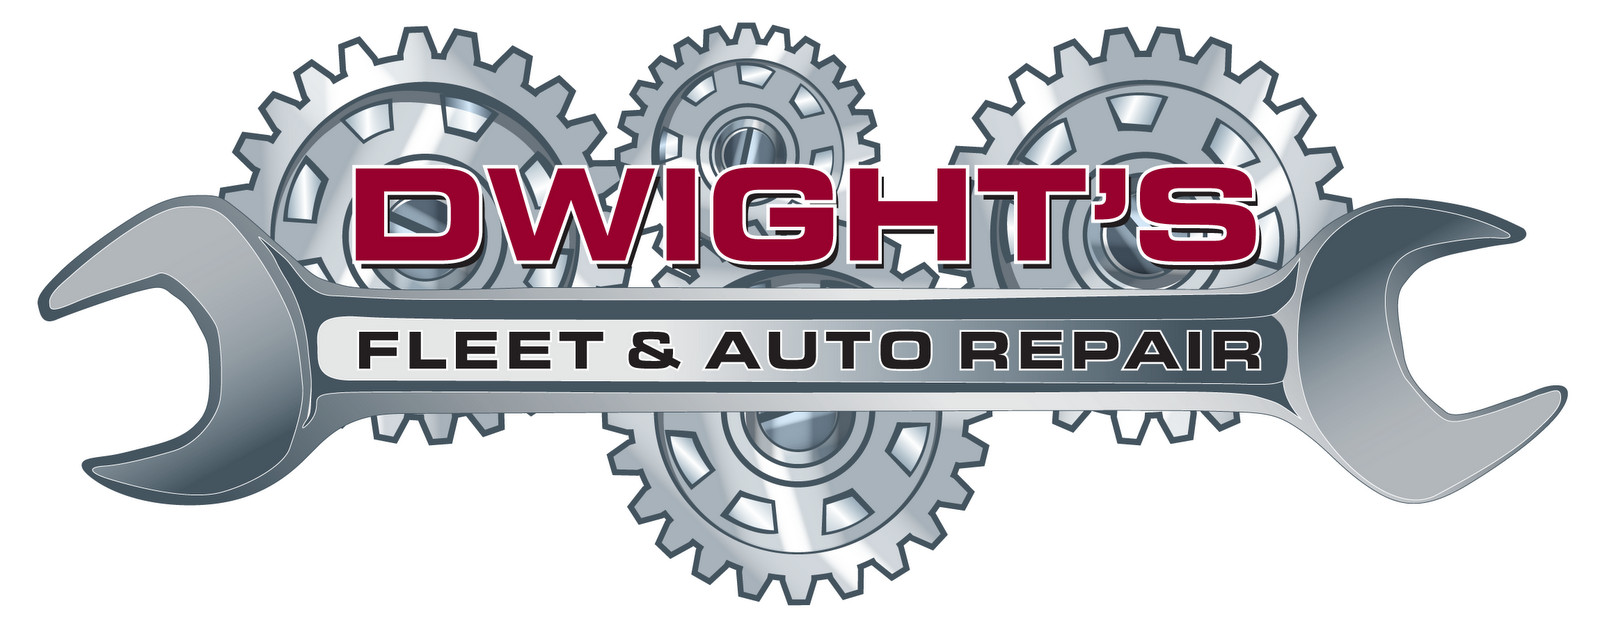 Auto Mechanic Logo Ideas